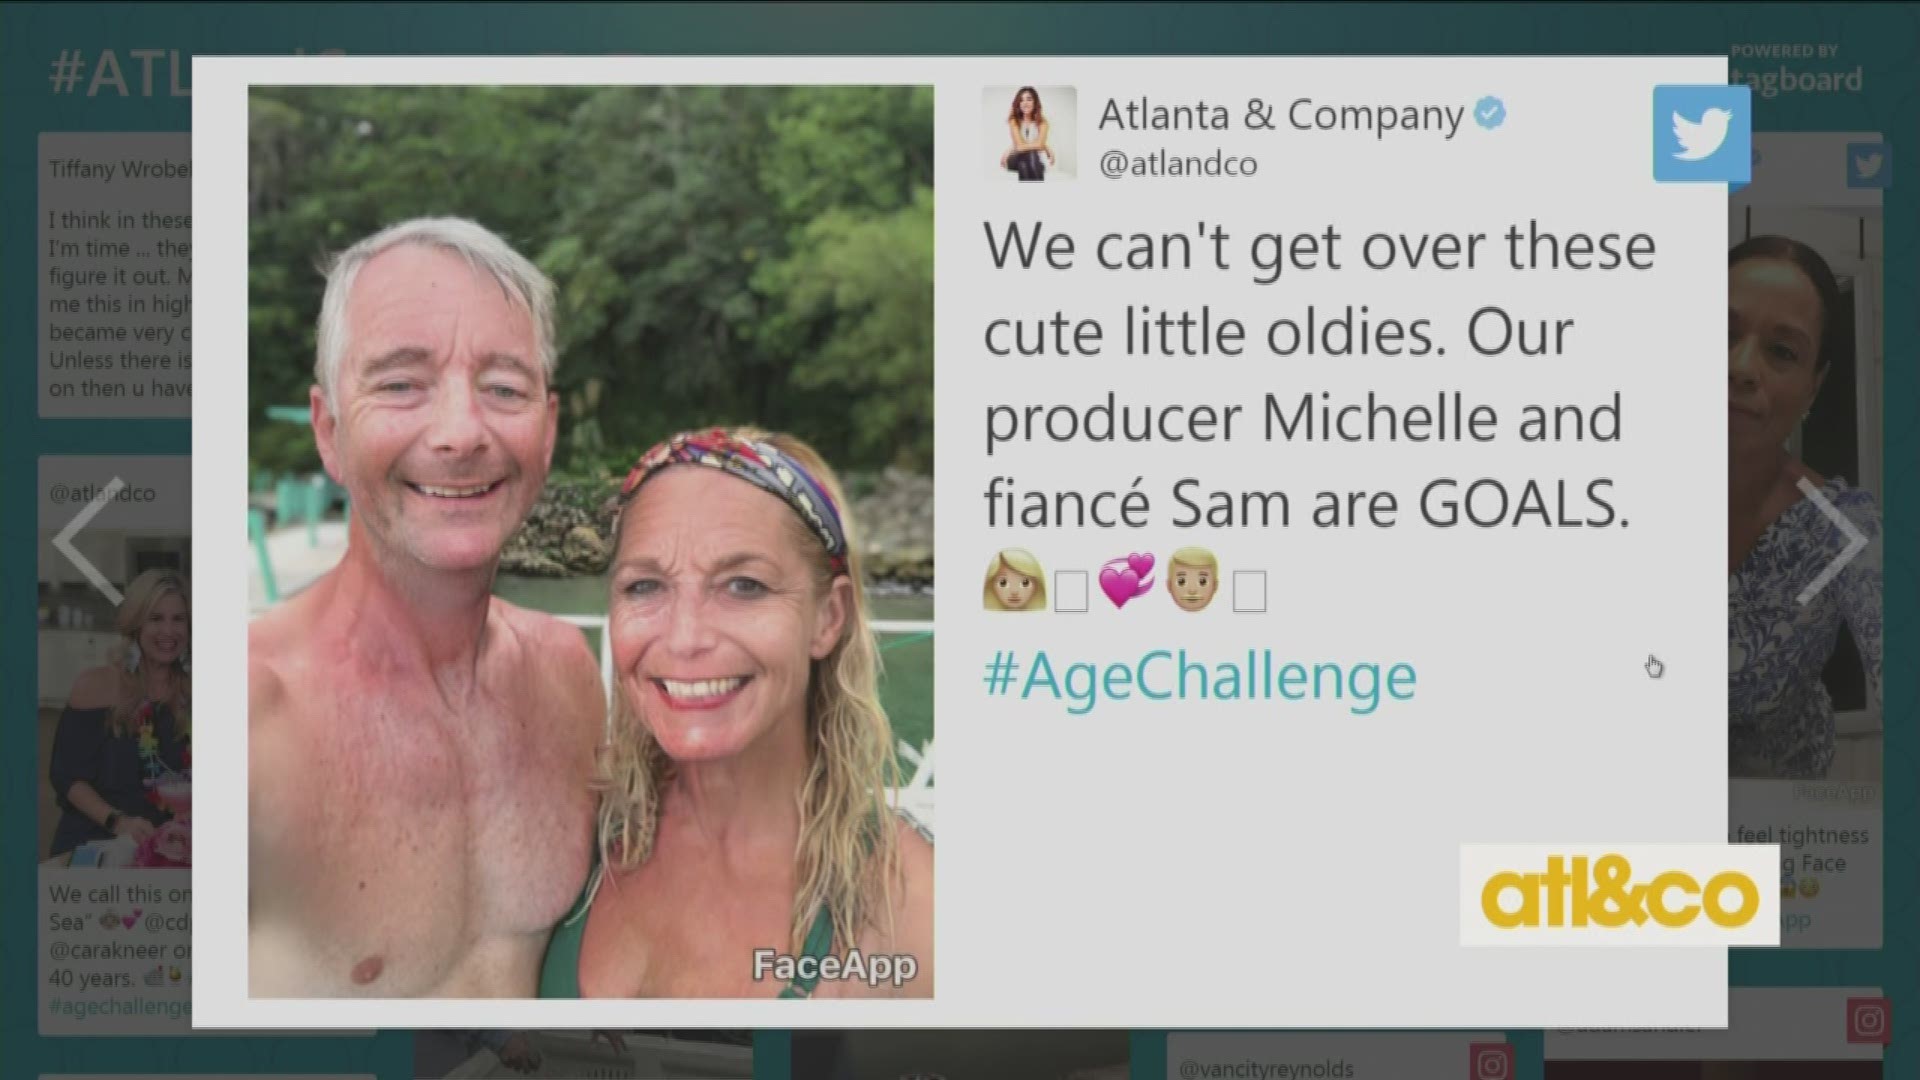 We take the Age Challenge seriously on 'Atlanta & Company'